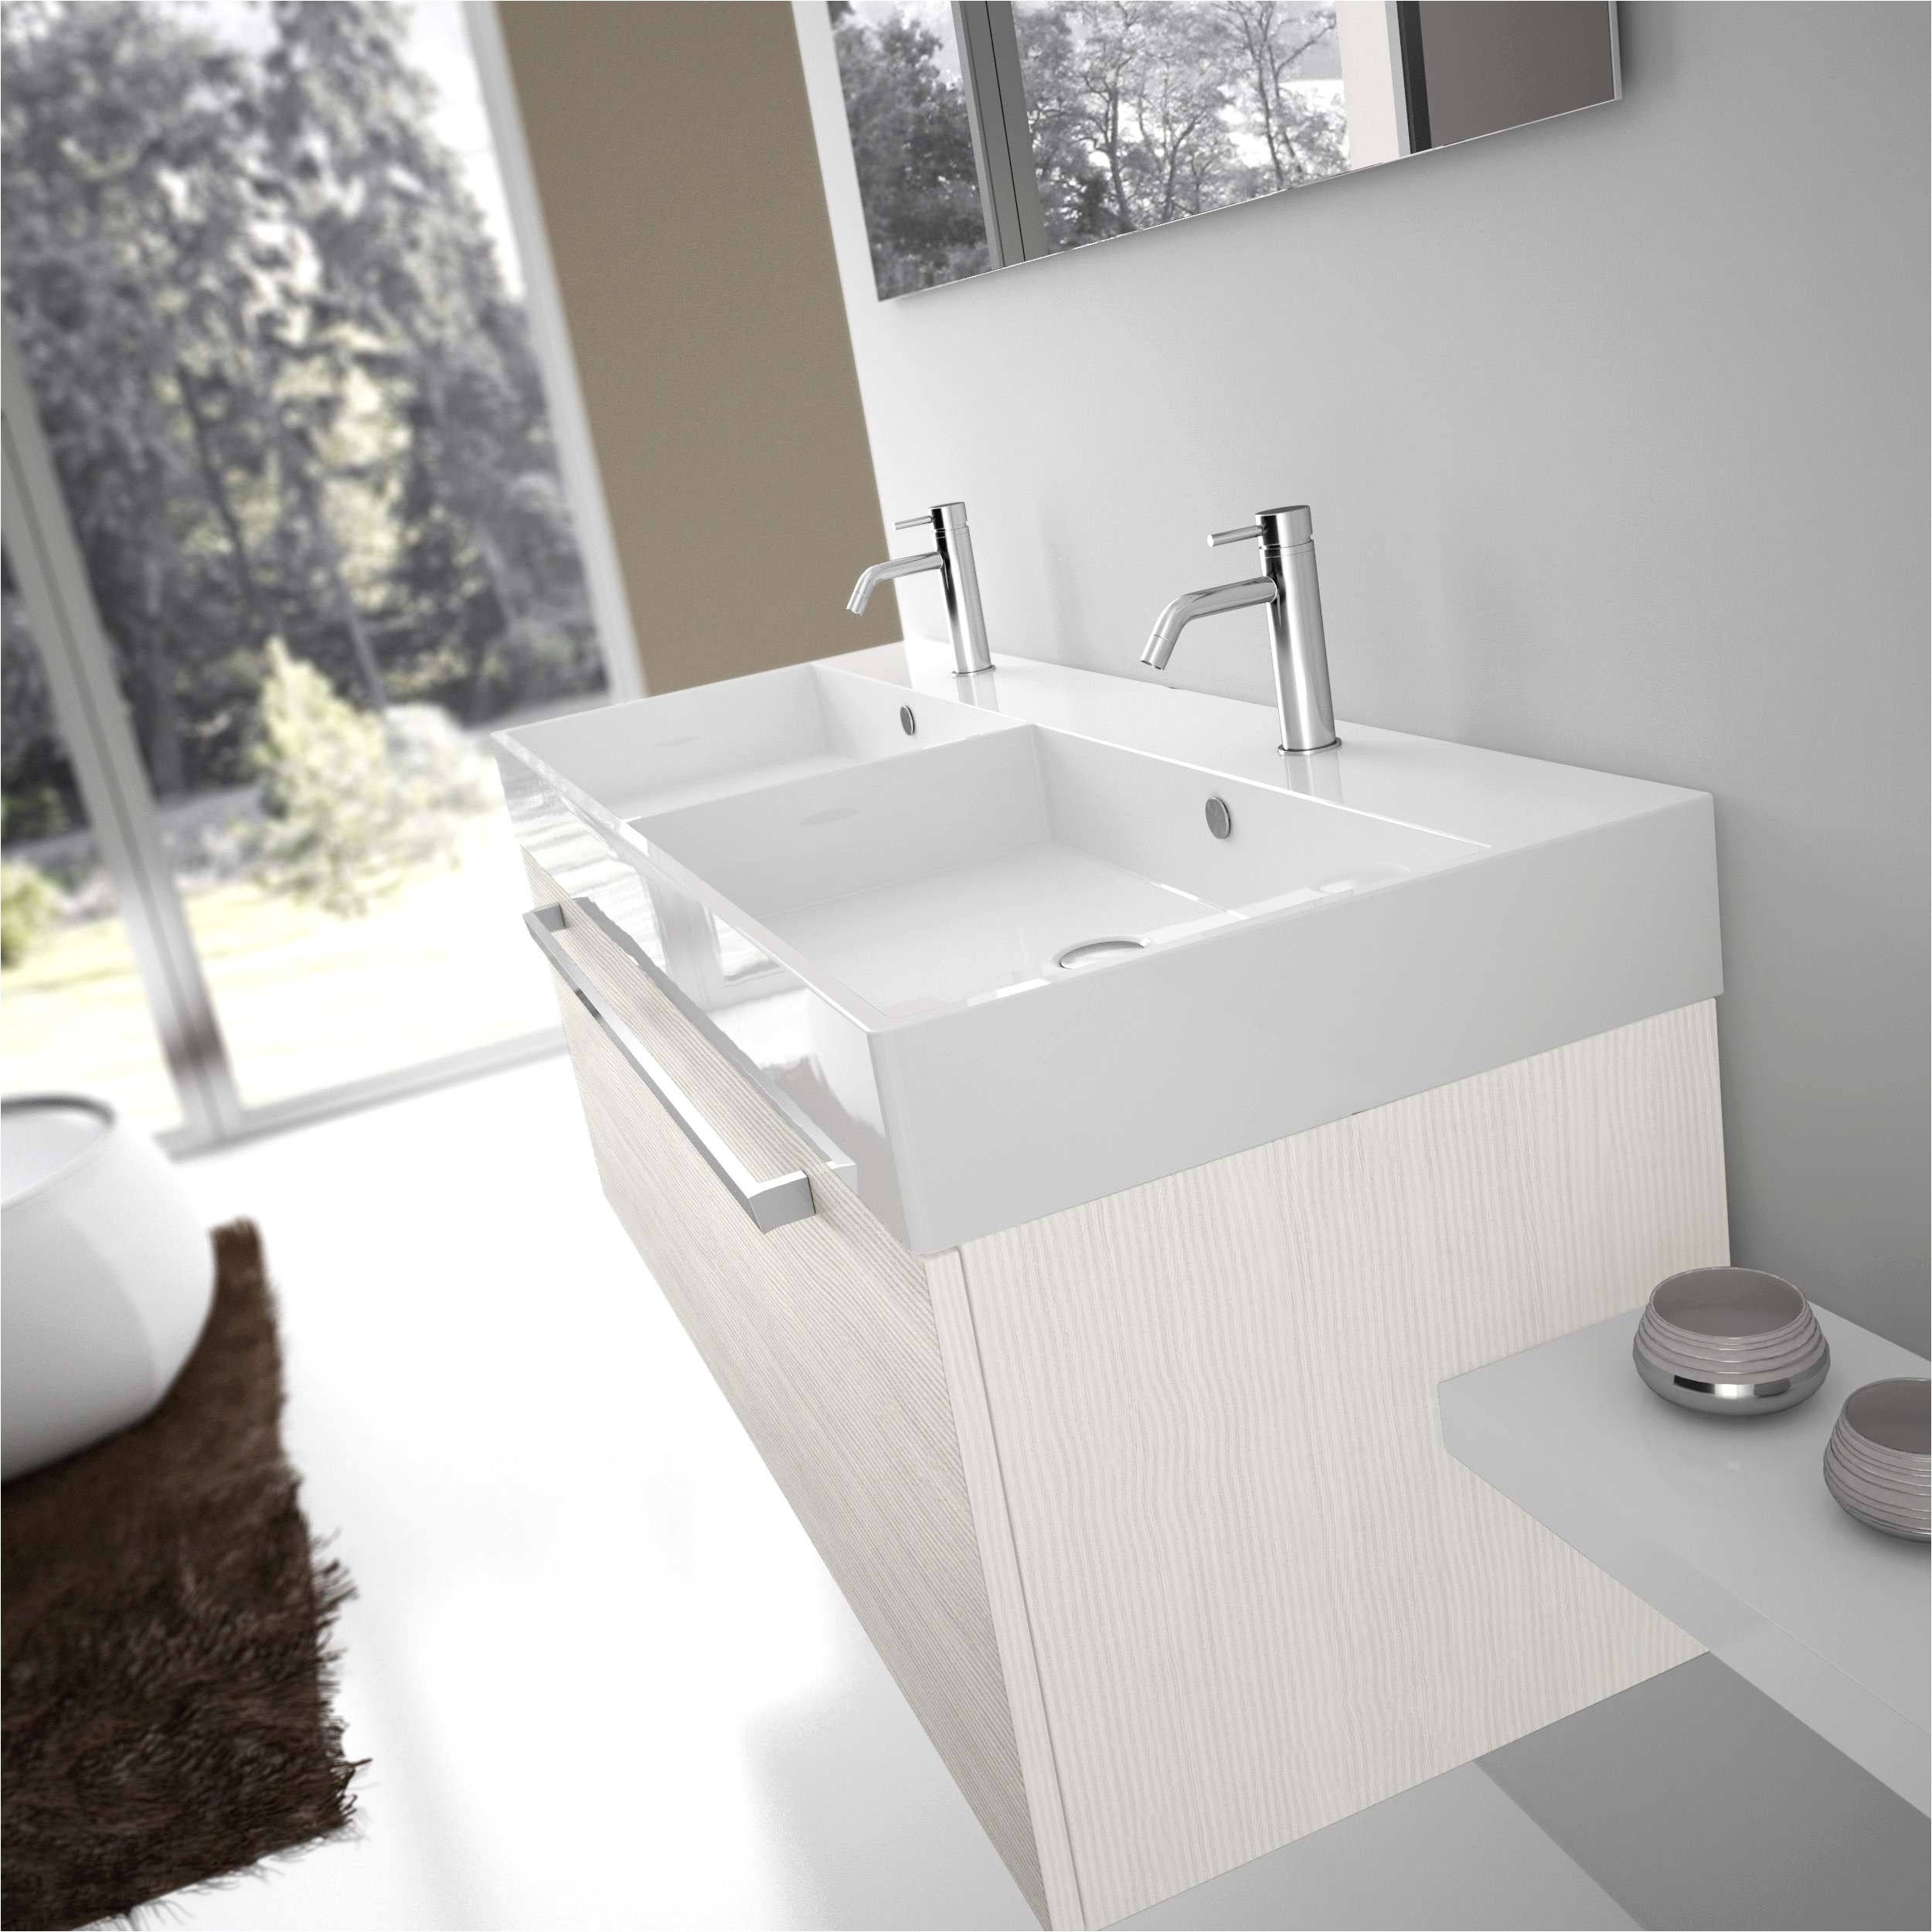 design new bathroom refrence basin sink wide basin bathroom sink inspirational h sink new